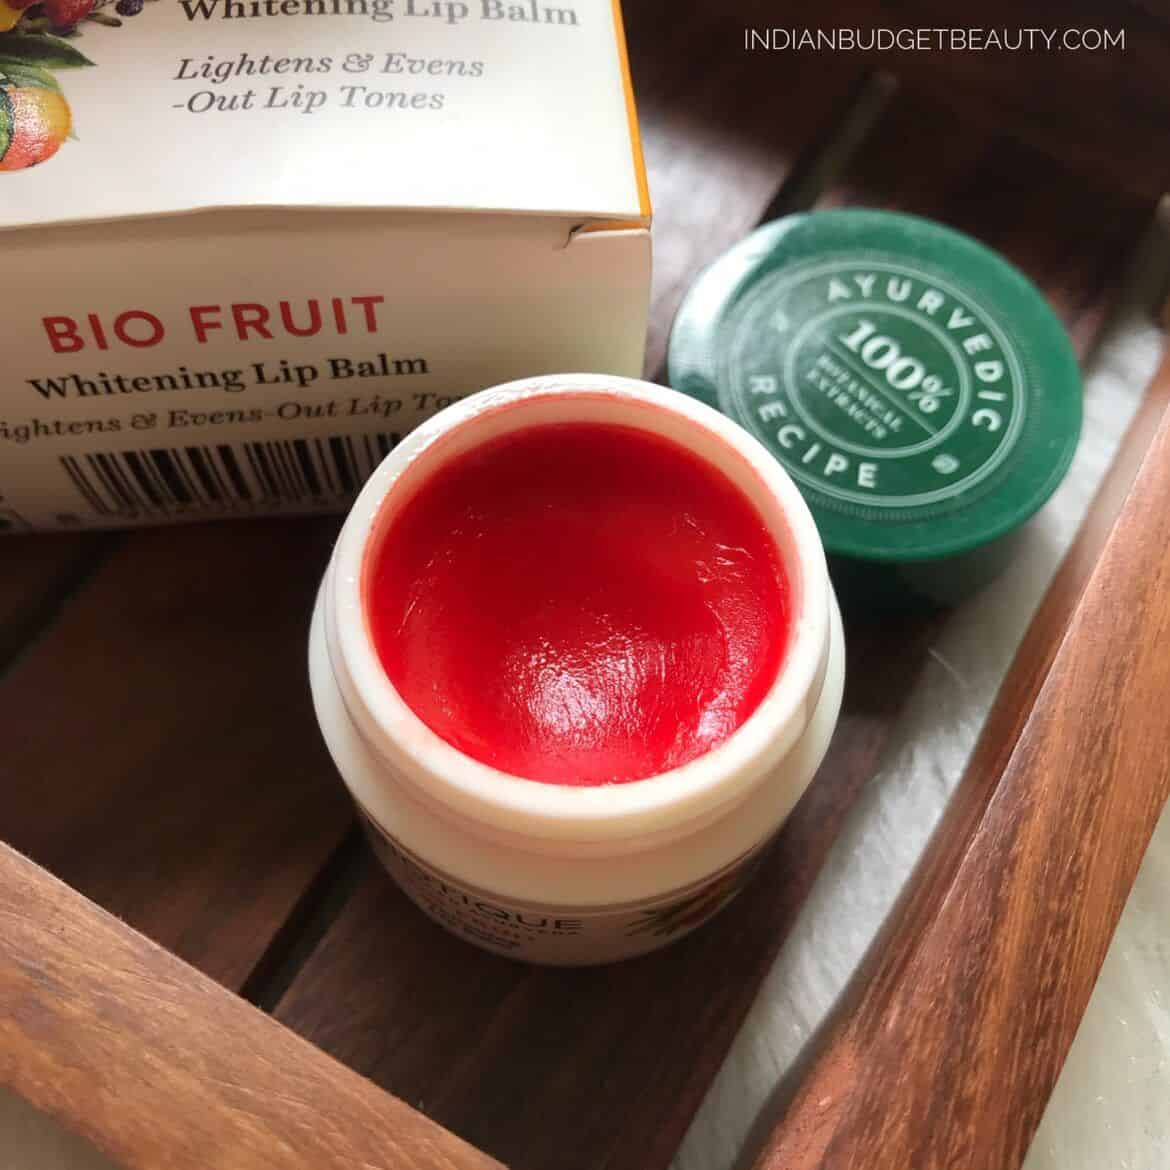 Biotique Bio Fruit Whitening Lip Balm Review